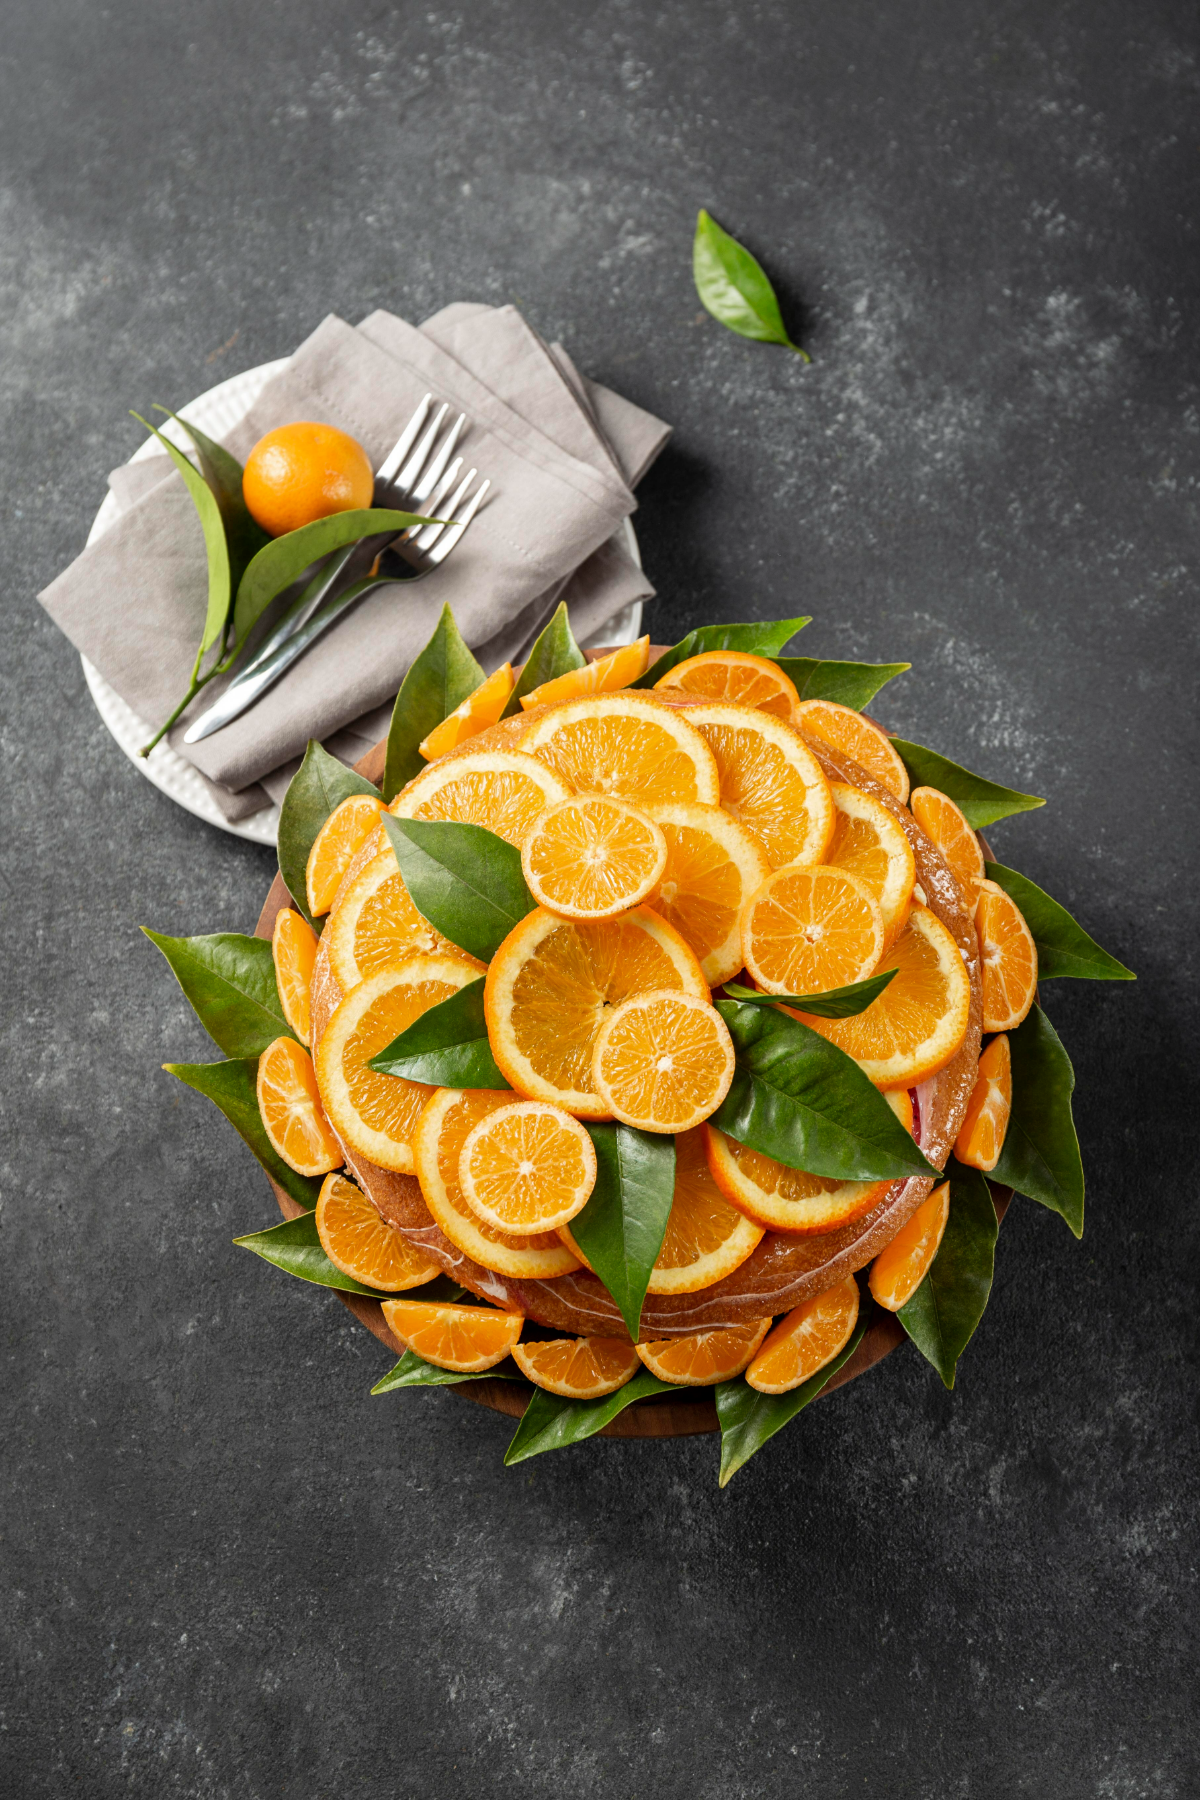 geheime zutat fuer bessere backwaren orangenkuchen backen